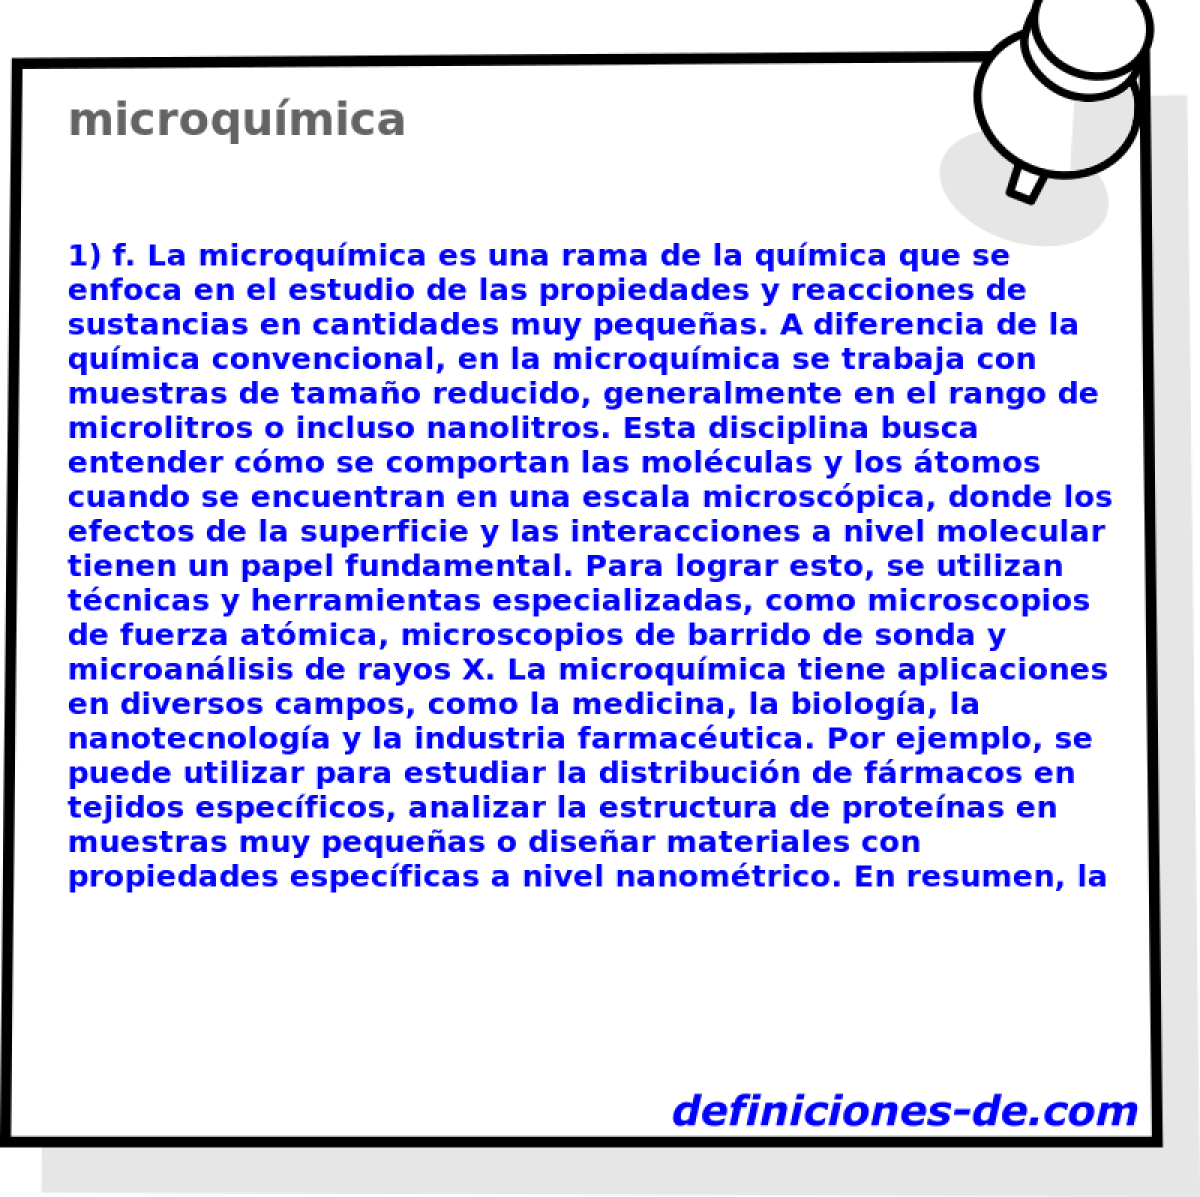 microqumica 